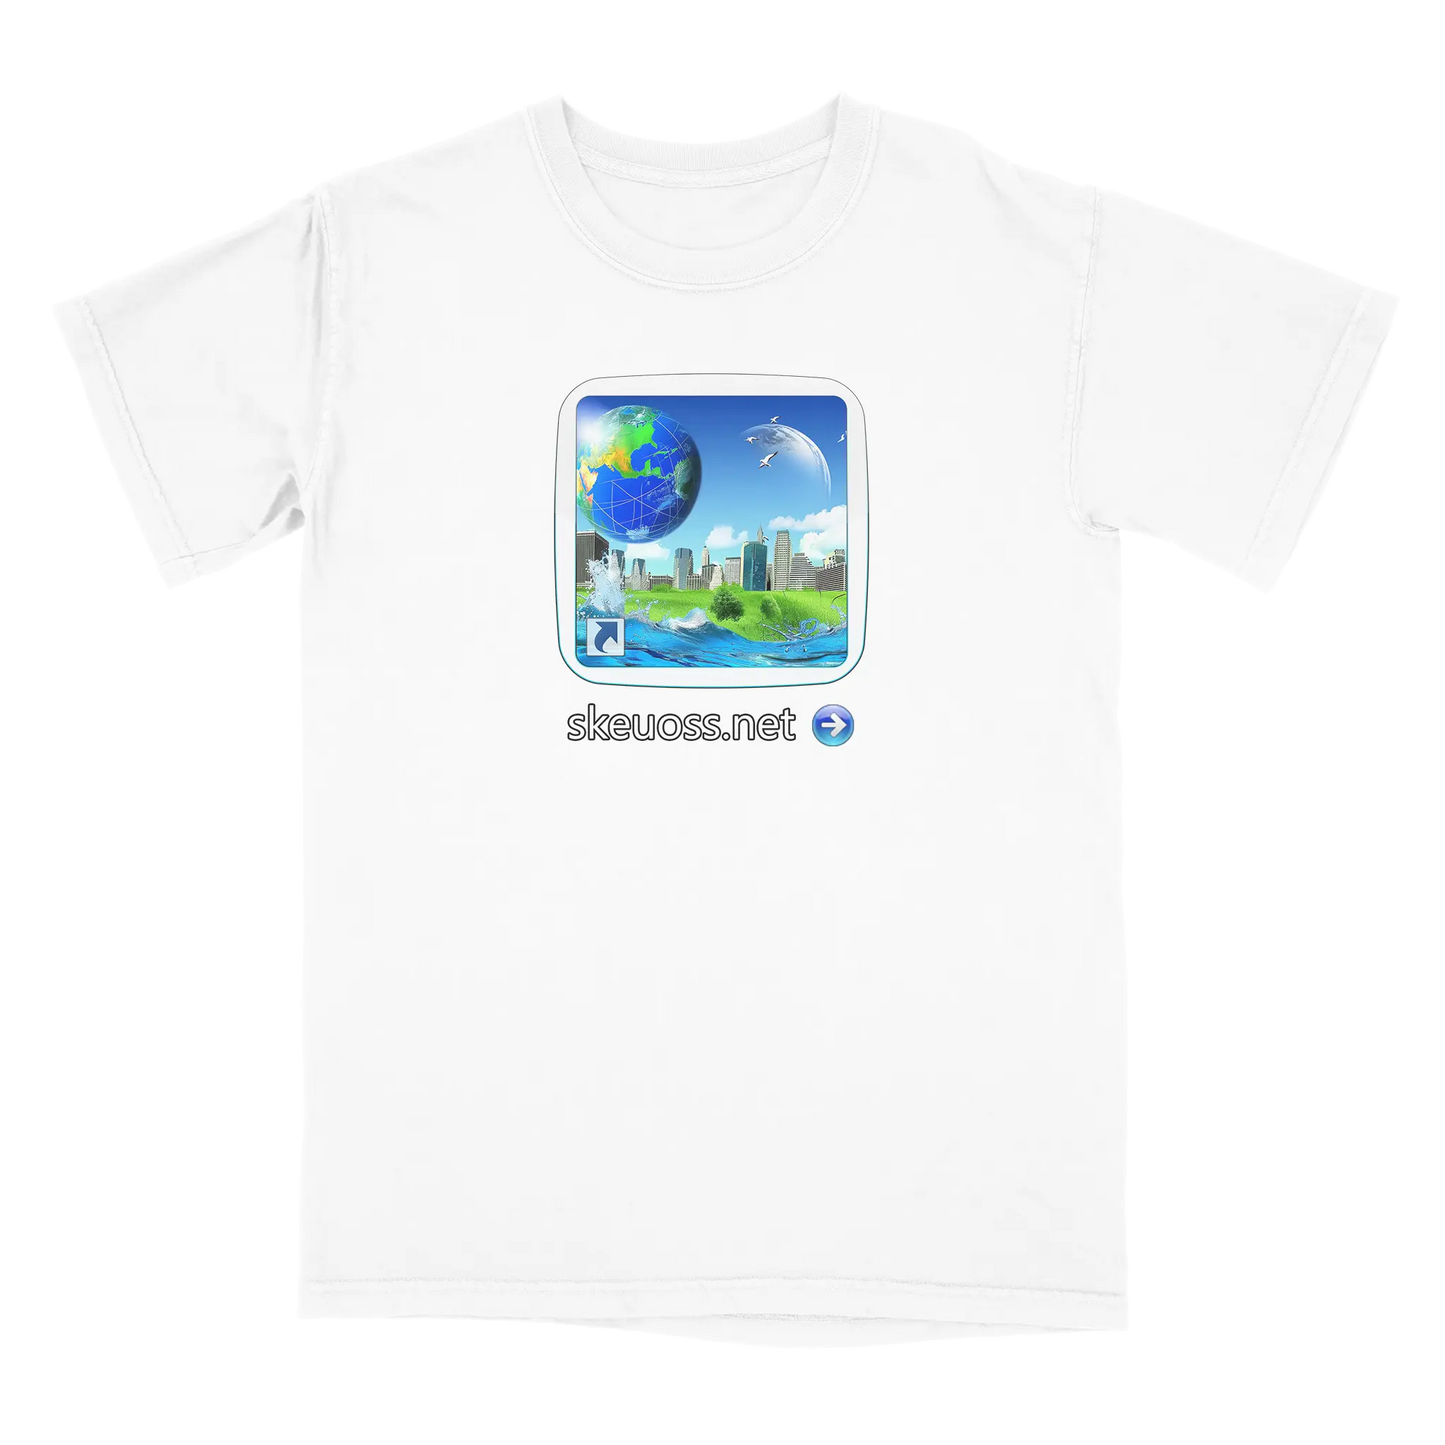 Frutiger Aero T-shirt - User Login Collection - User 360